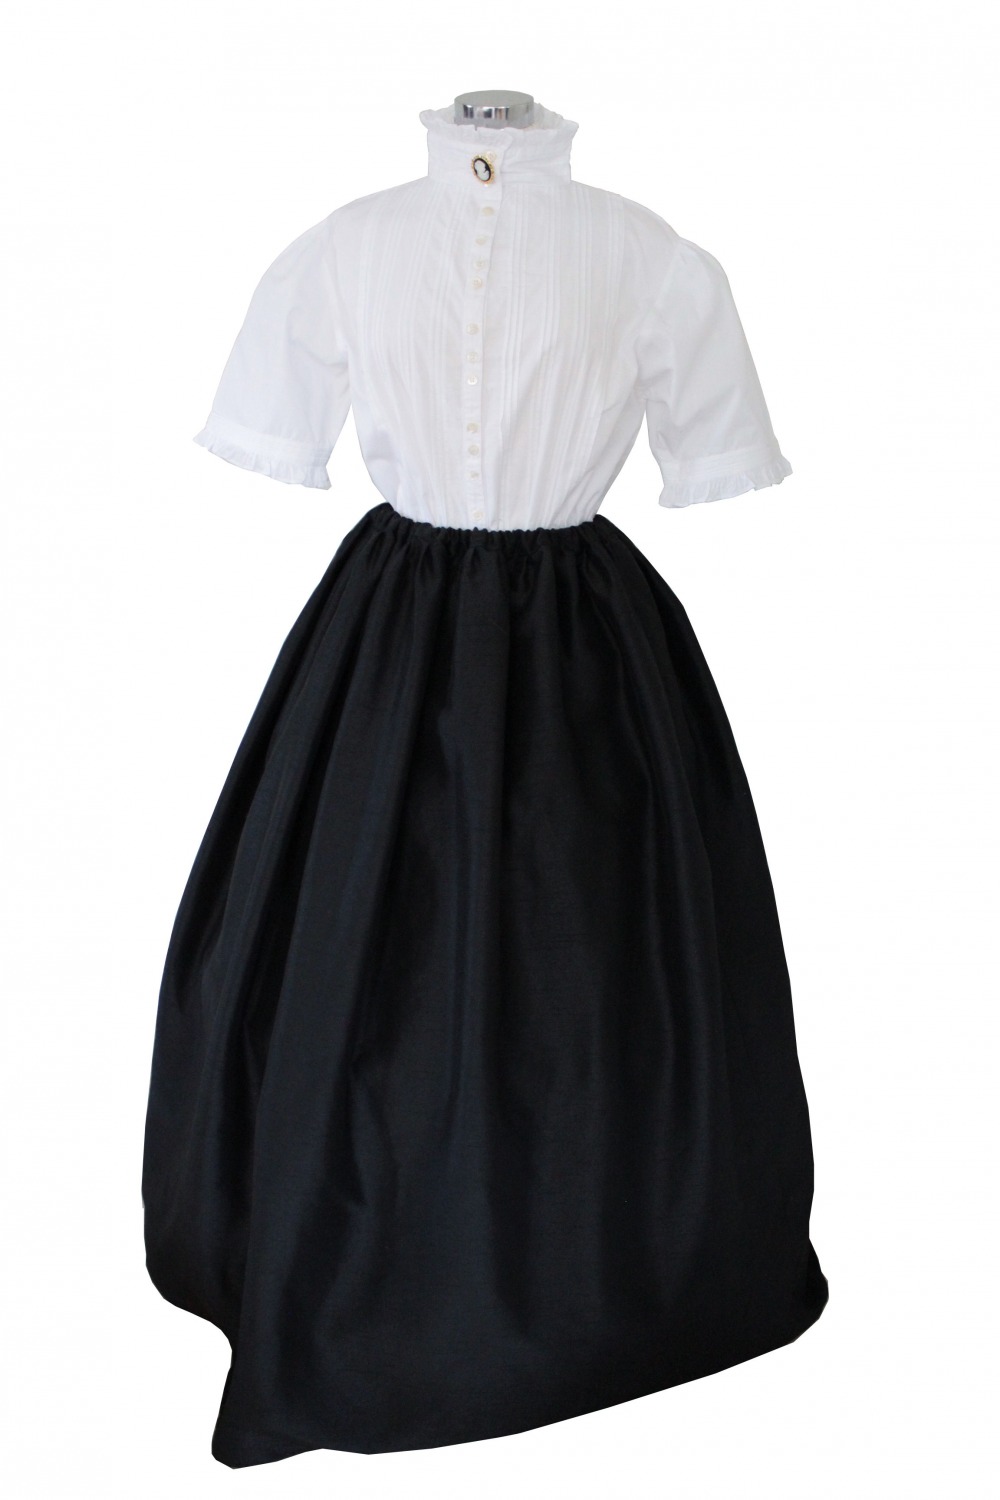 Ladies Victorian Day Costume Size 12 - 16 Image